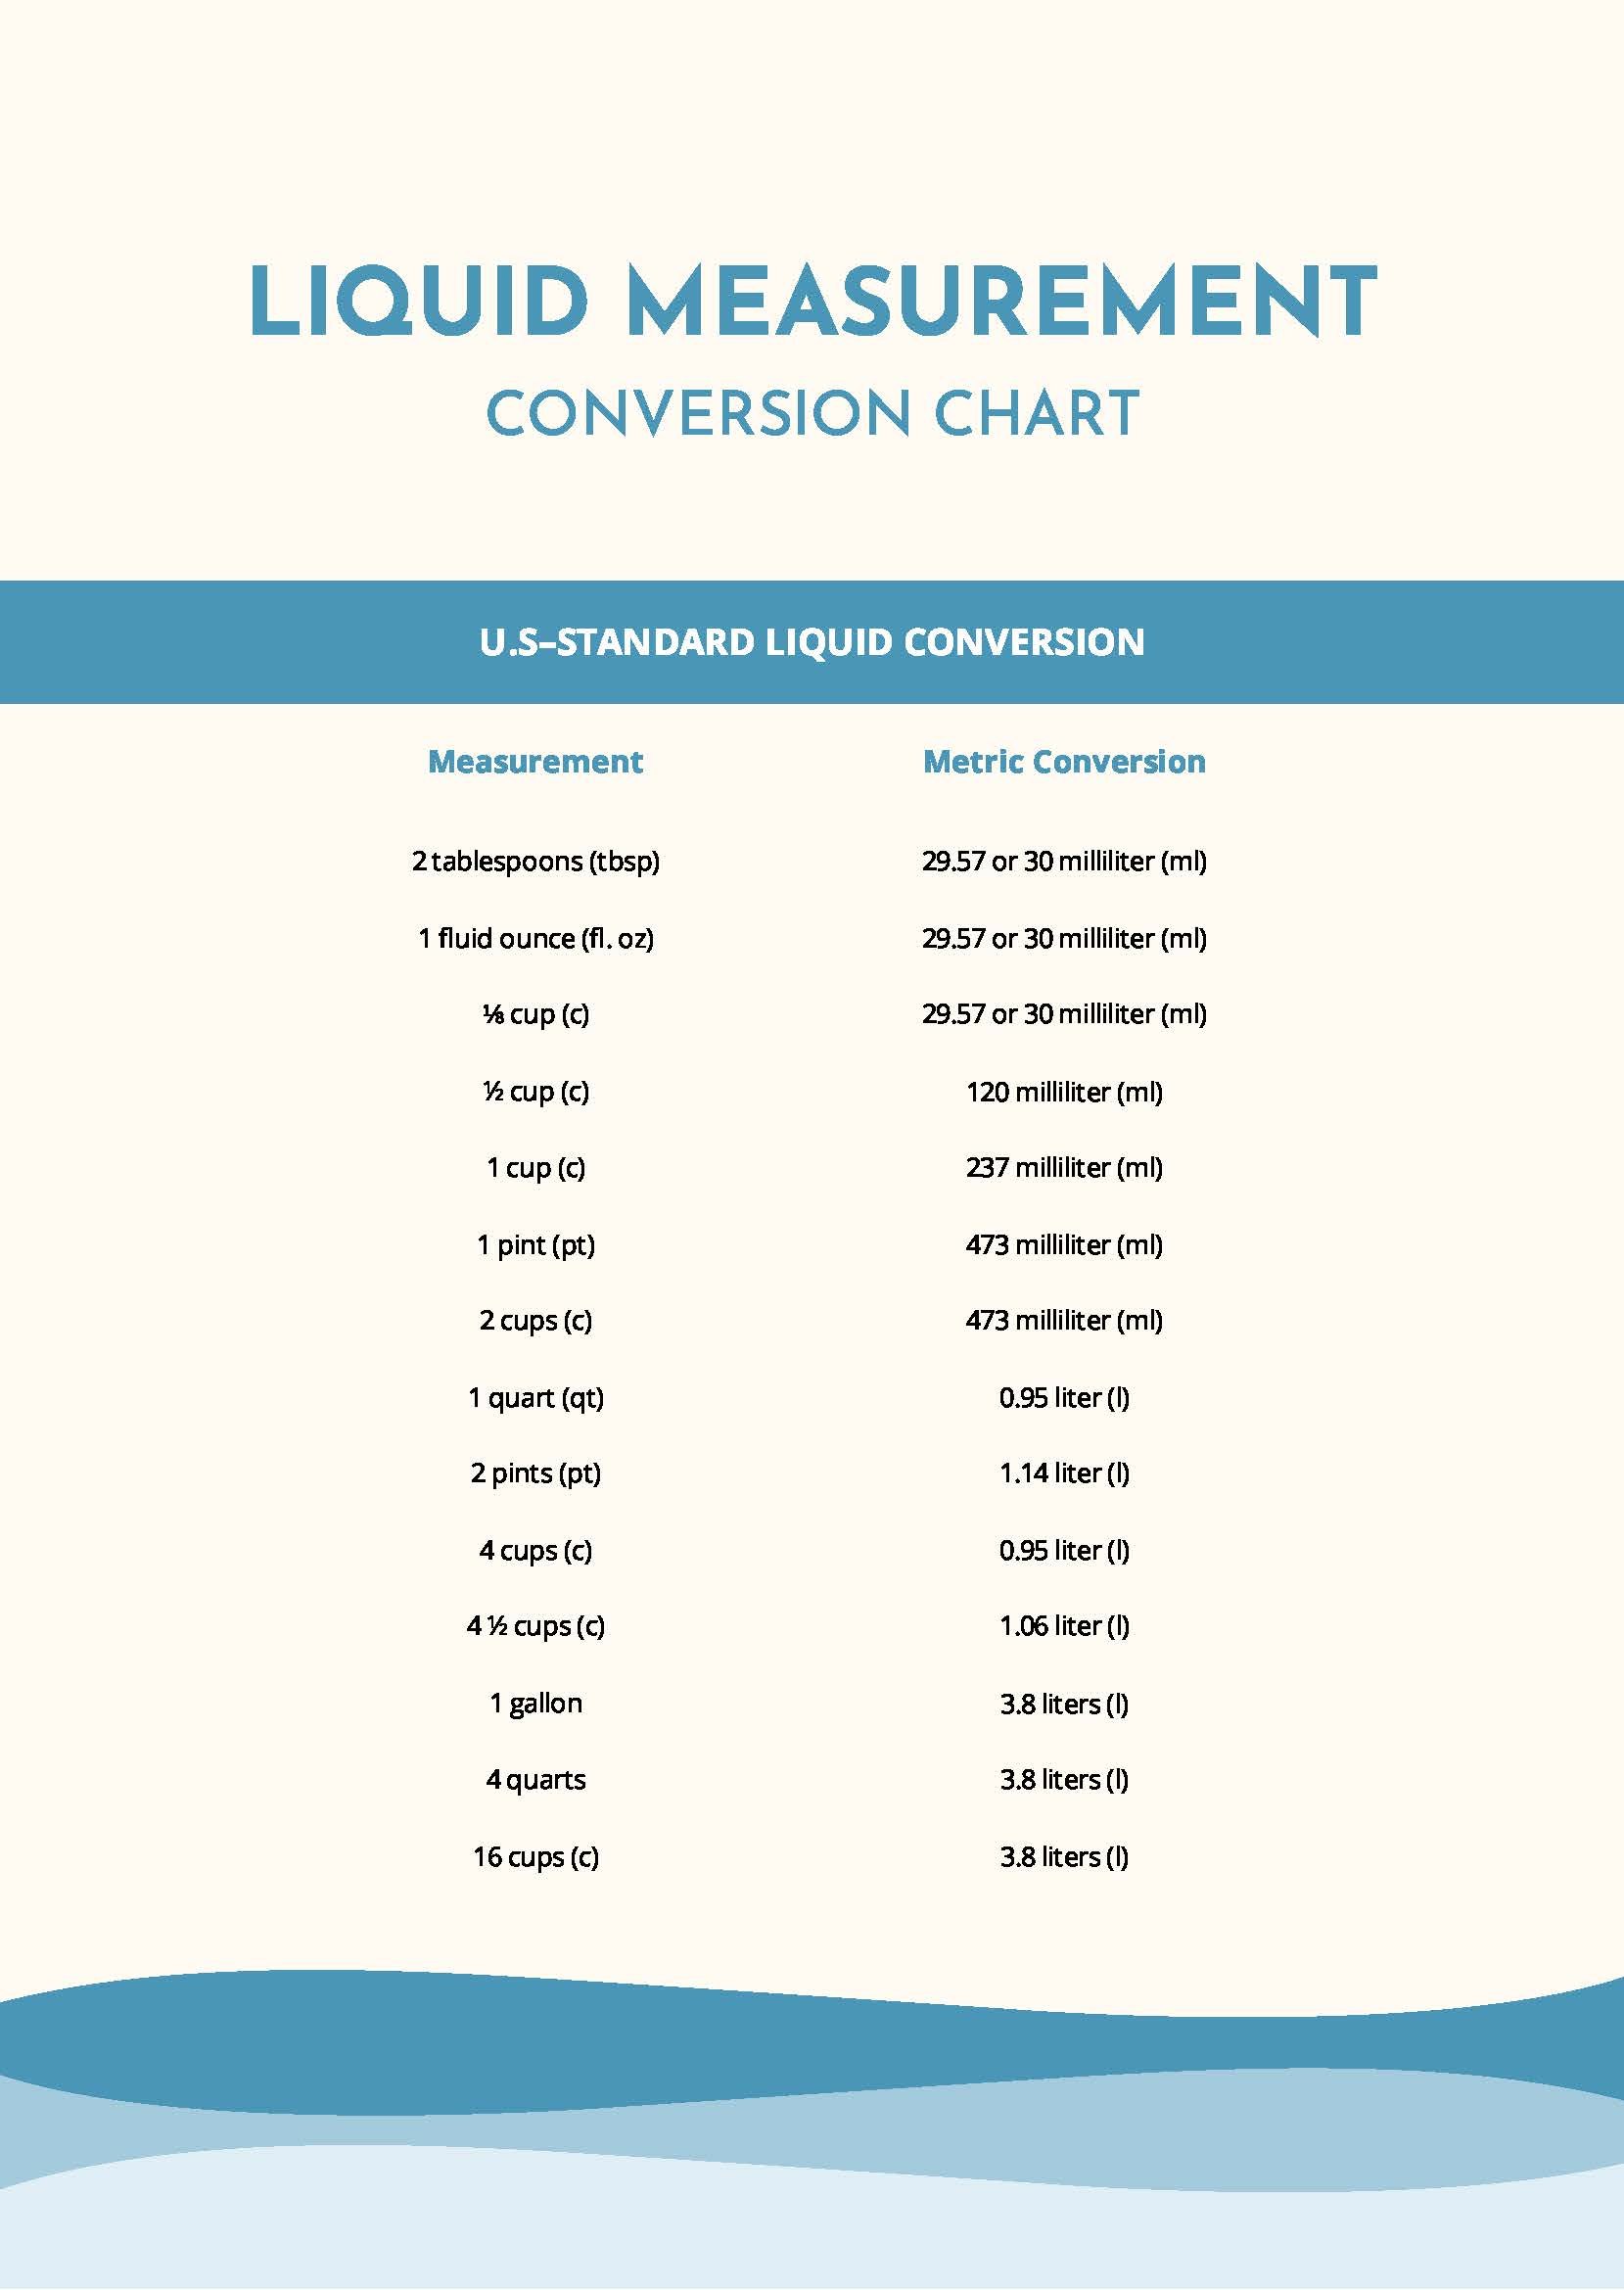 conversion charts for liquid measurements